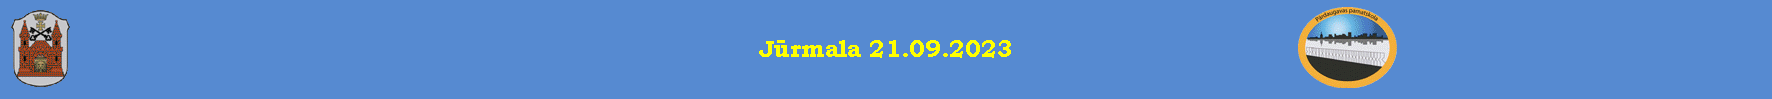 Jūrmala 21.09.2023